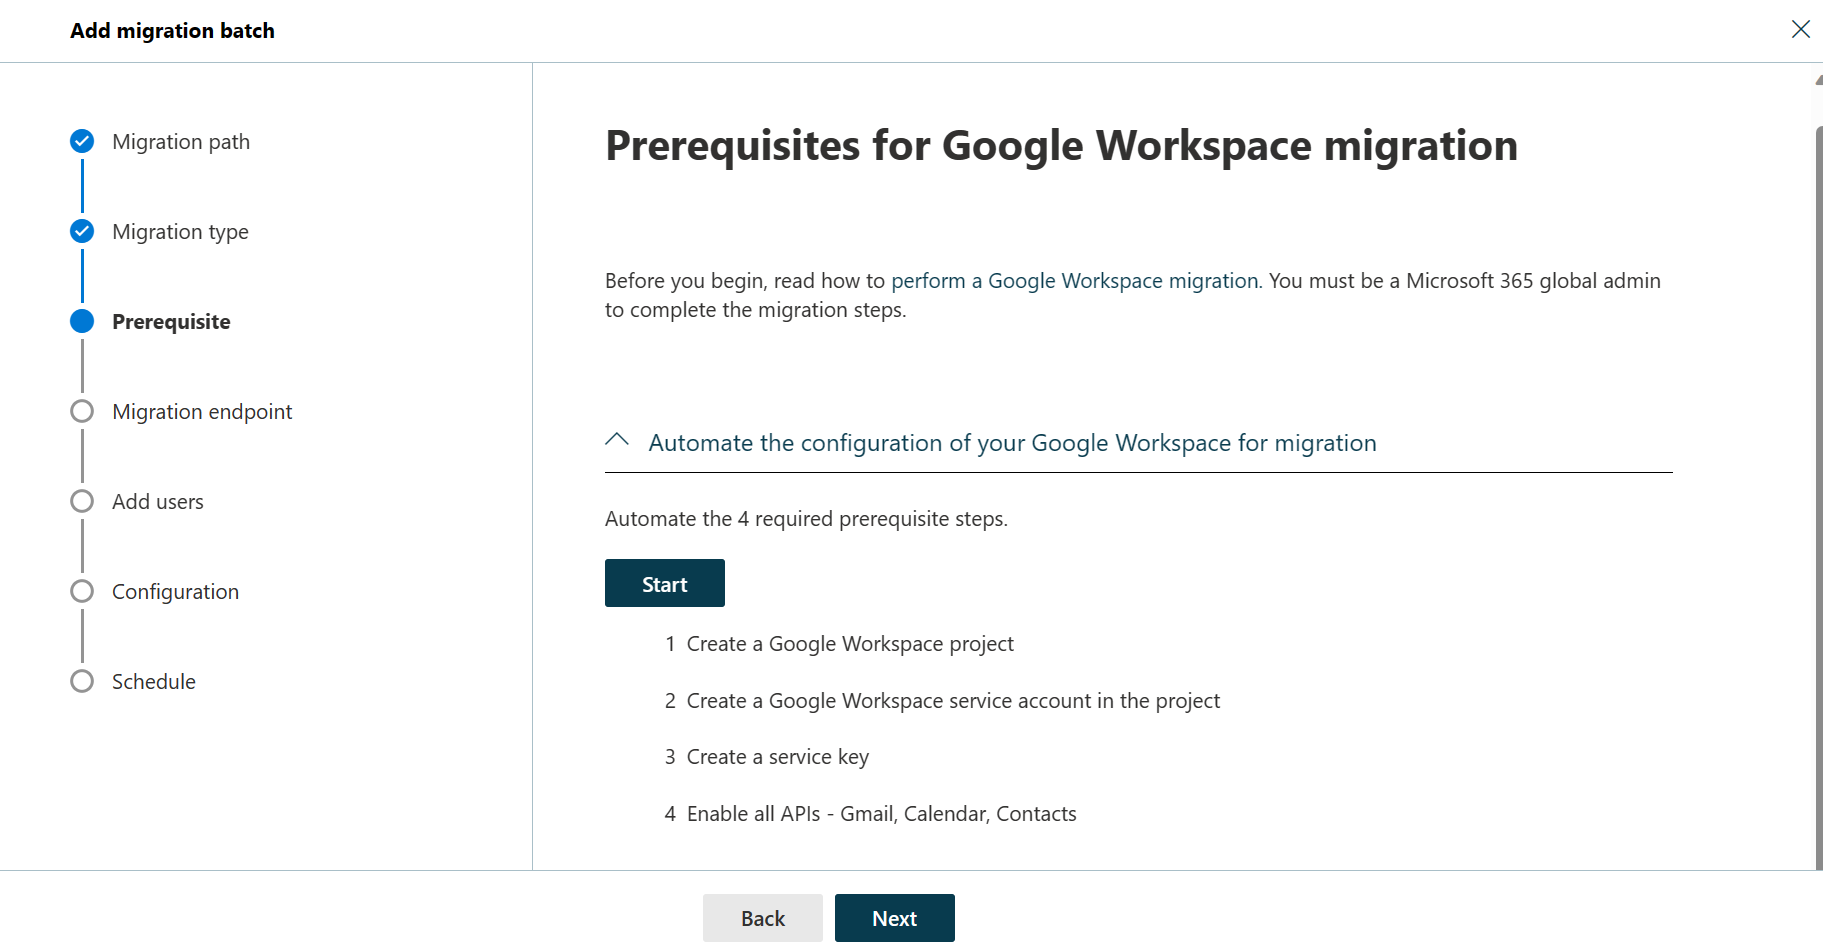 “Google 工作区迁移的先决条件”对话框的屏幕截图，其中显示了配置步骤的列表，以及将自动执行该过程的“启动”按钮。